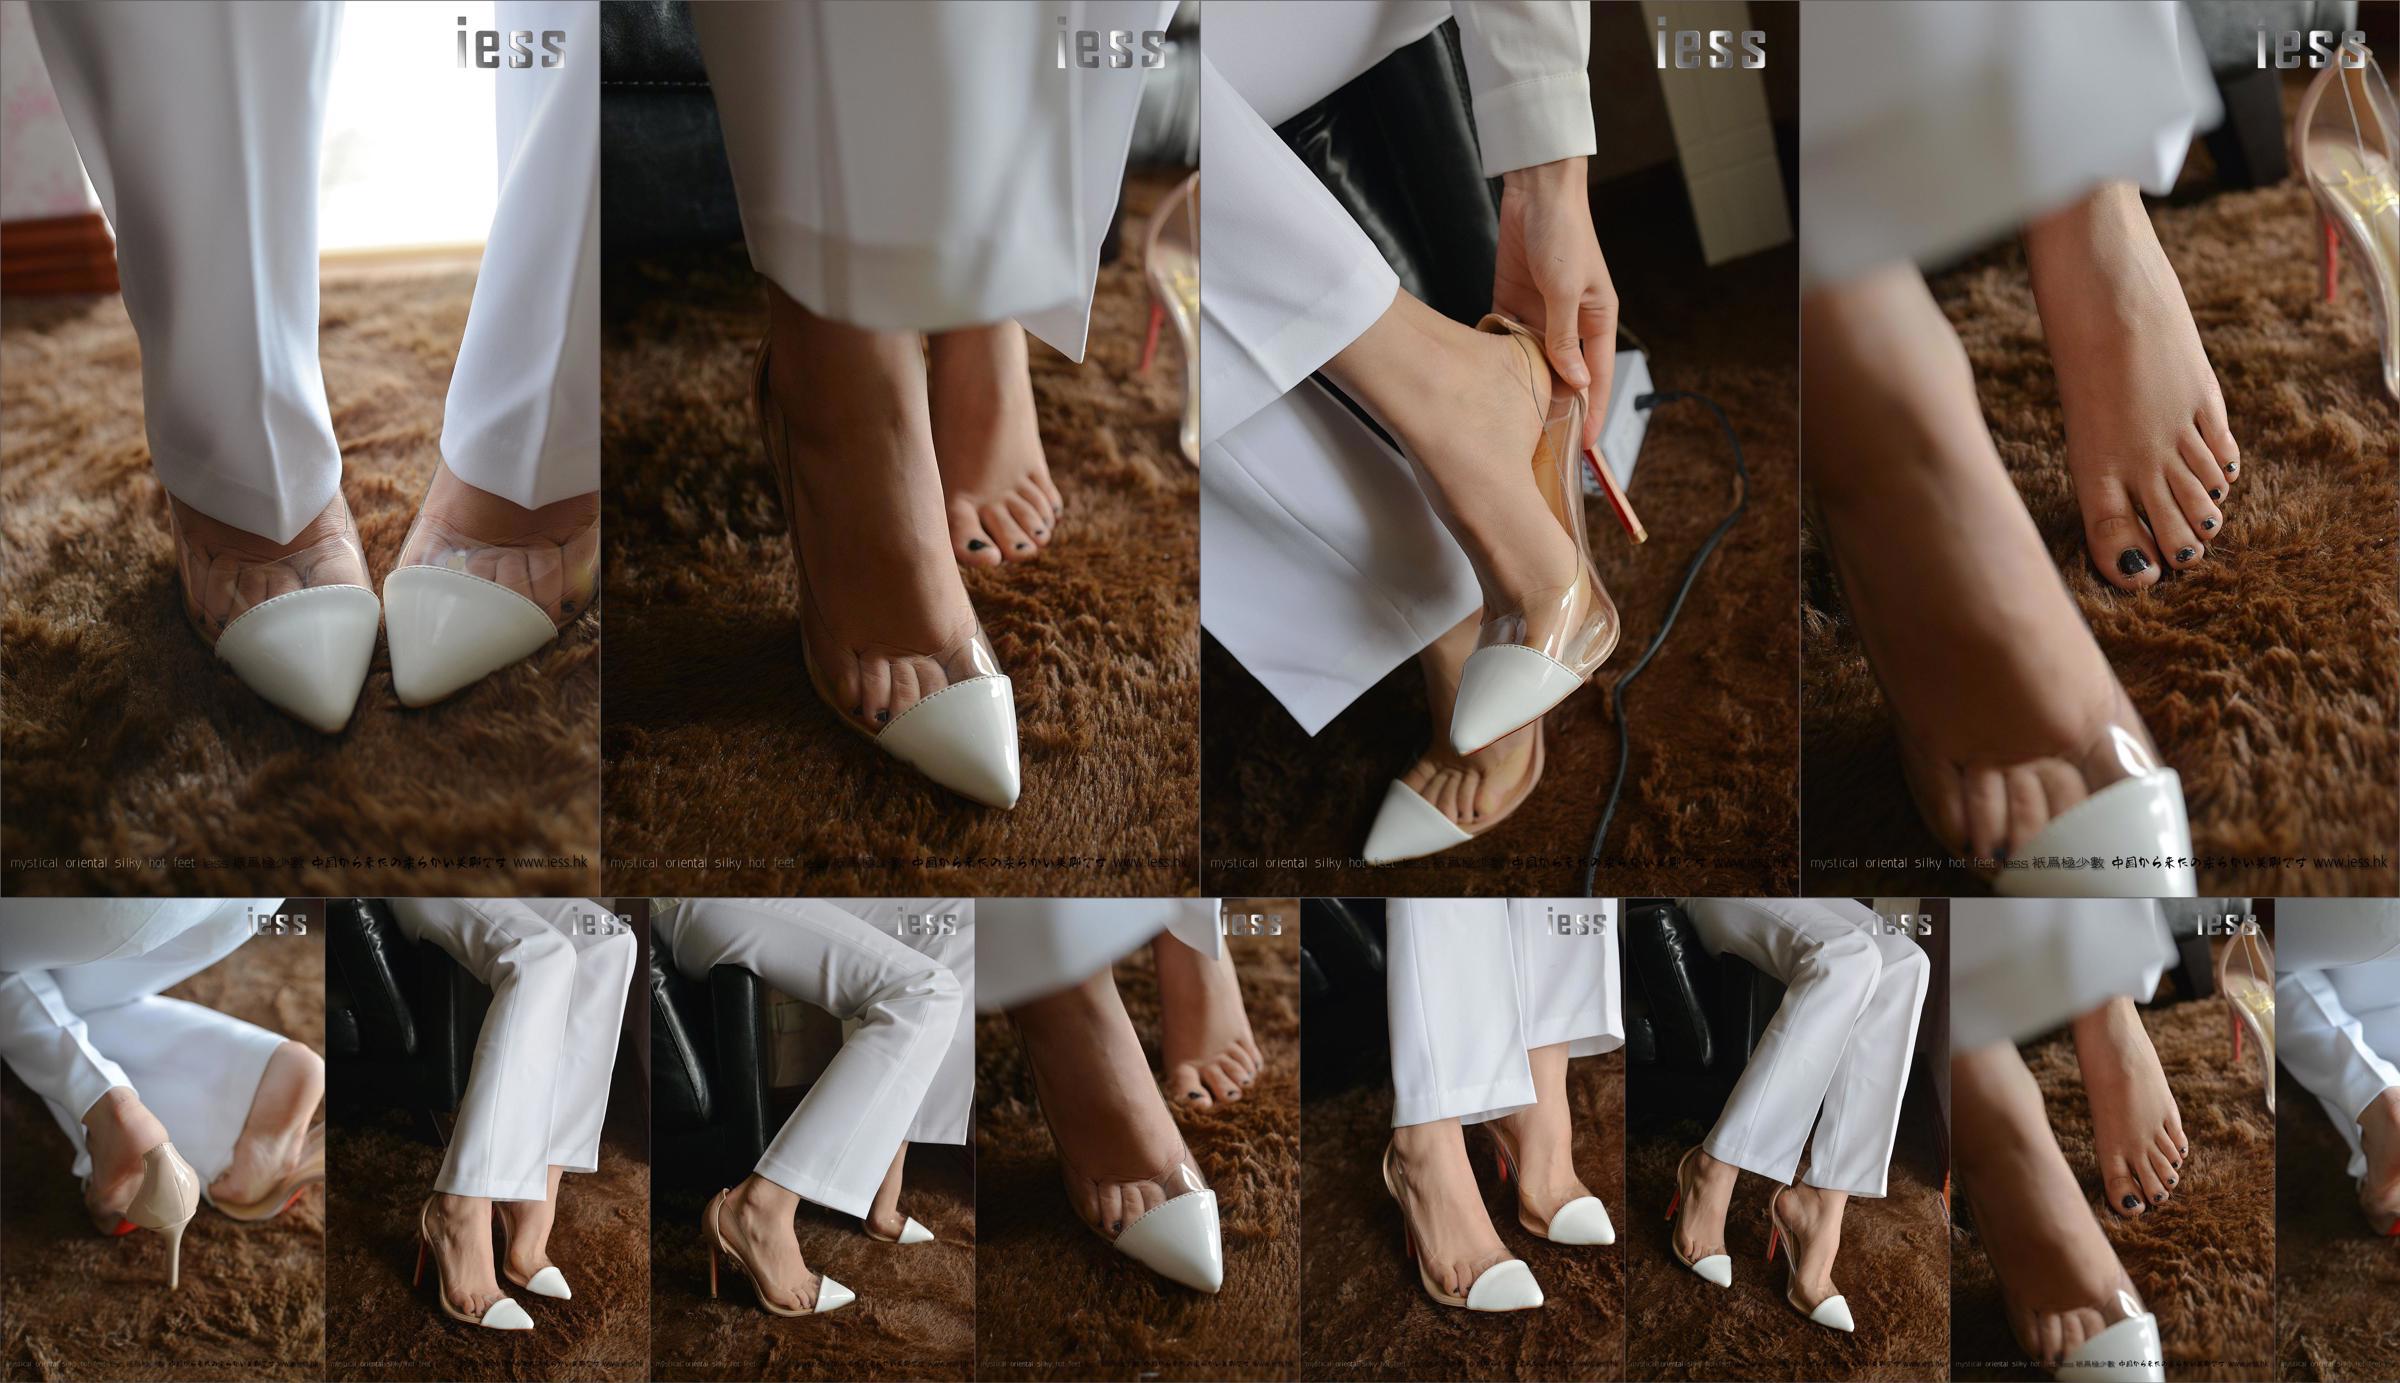 Silky Foot Bento 058 Suspense "Collection-Bare Foot High Heels" [IESS Wei Si Fun Xiang] No.04fb46 Pagina 1